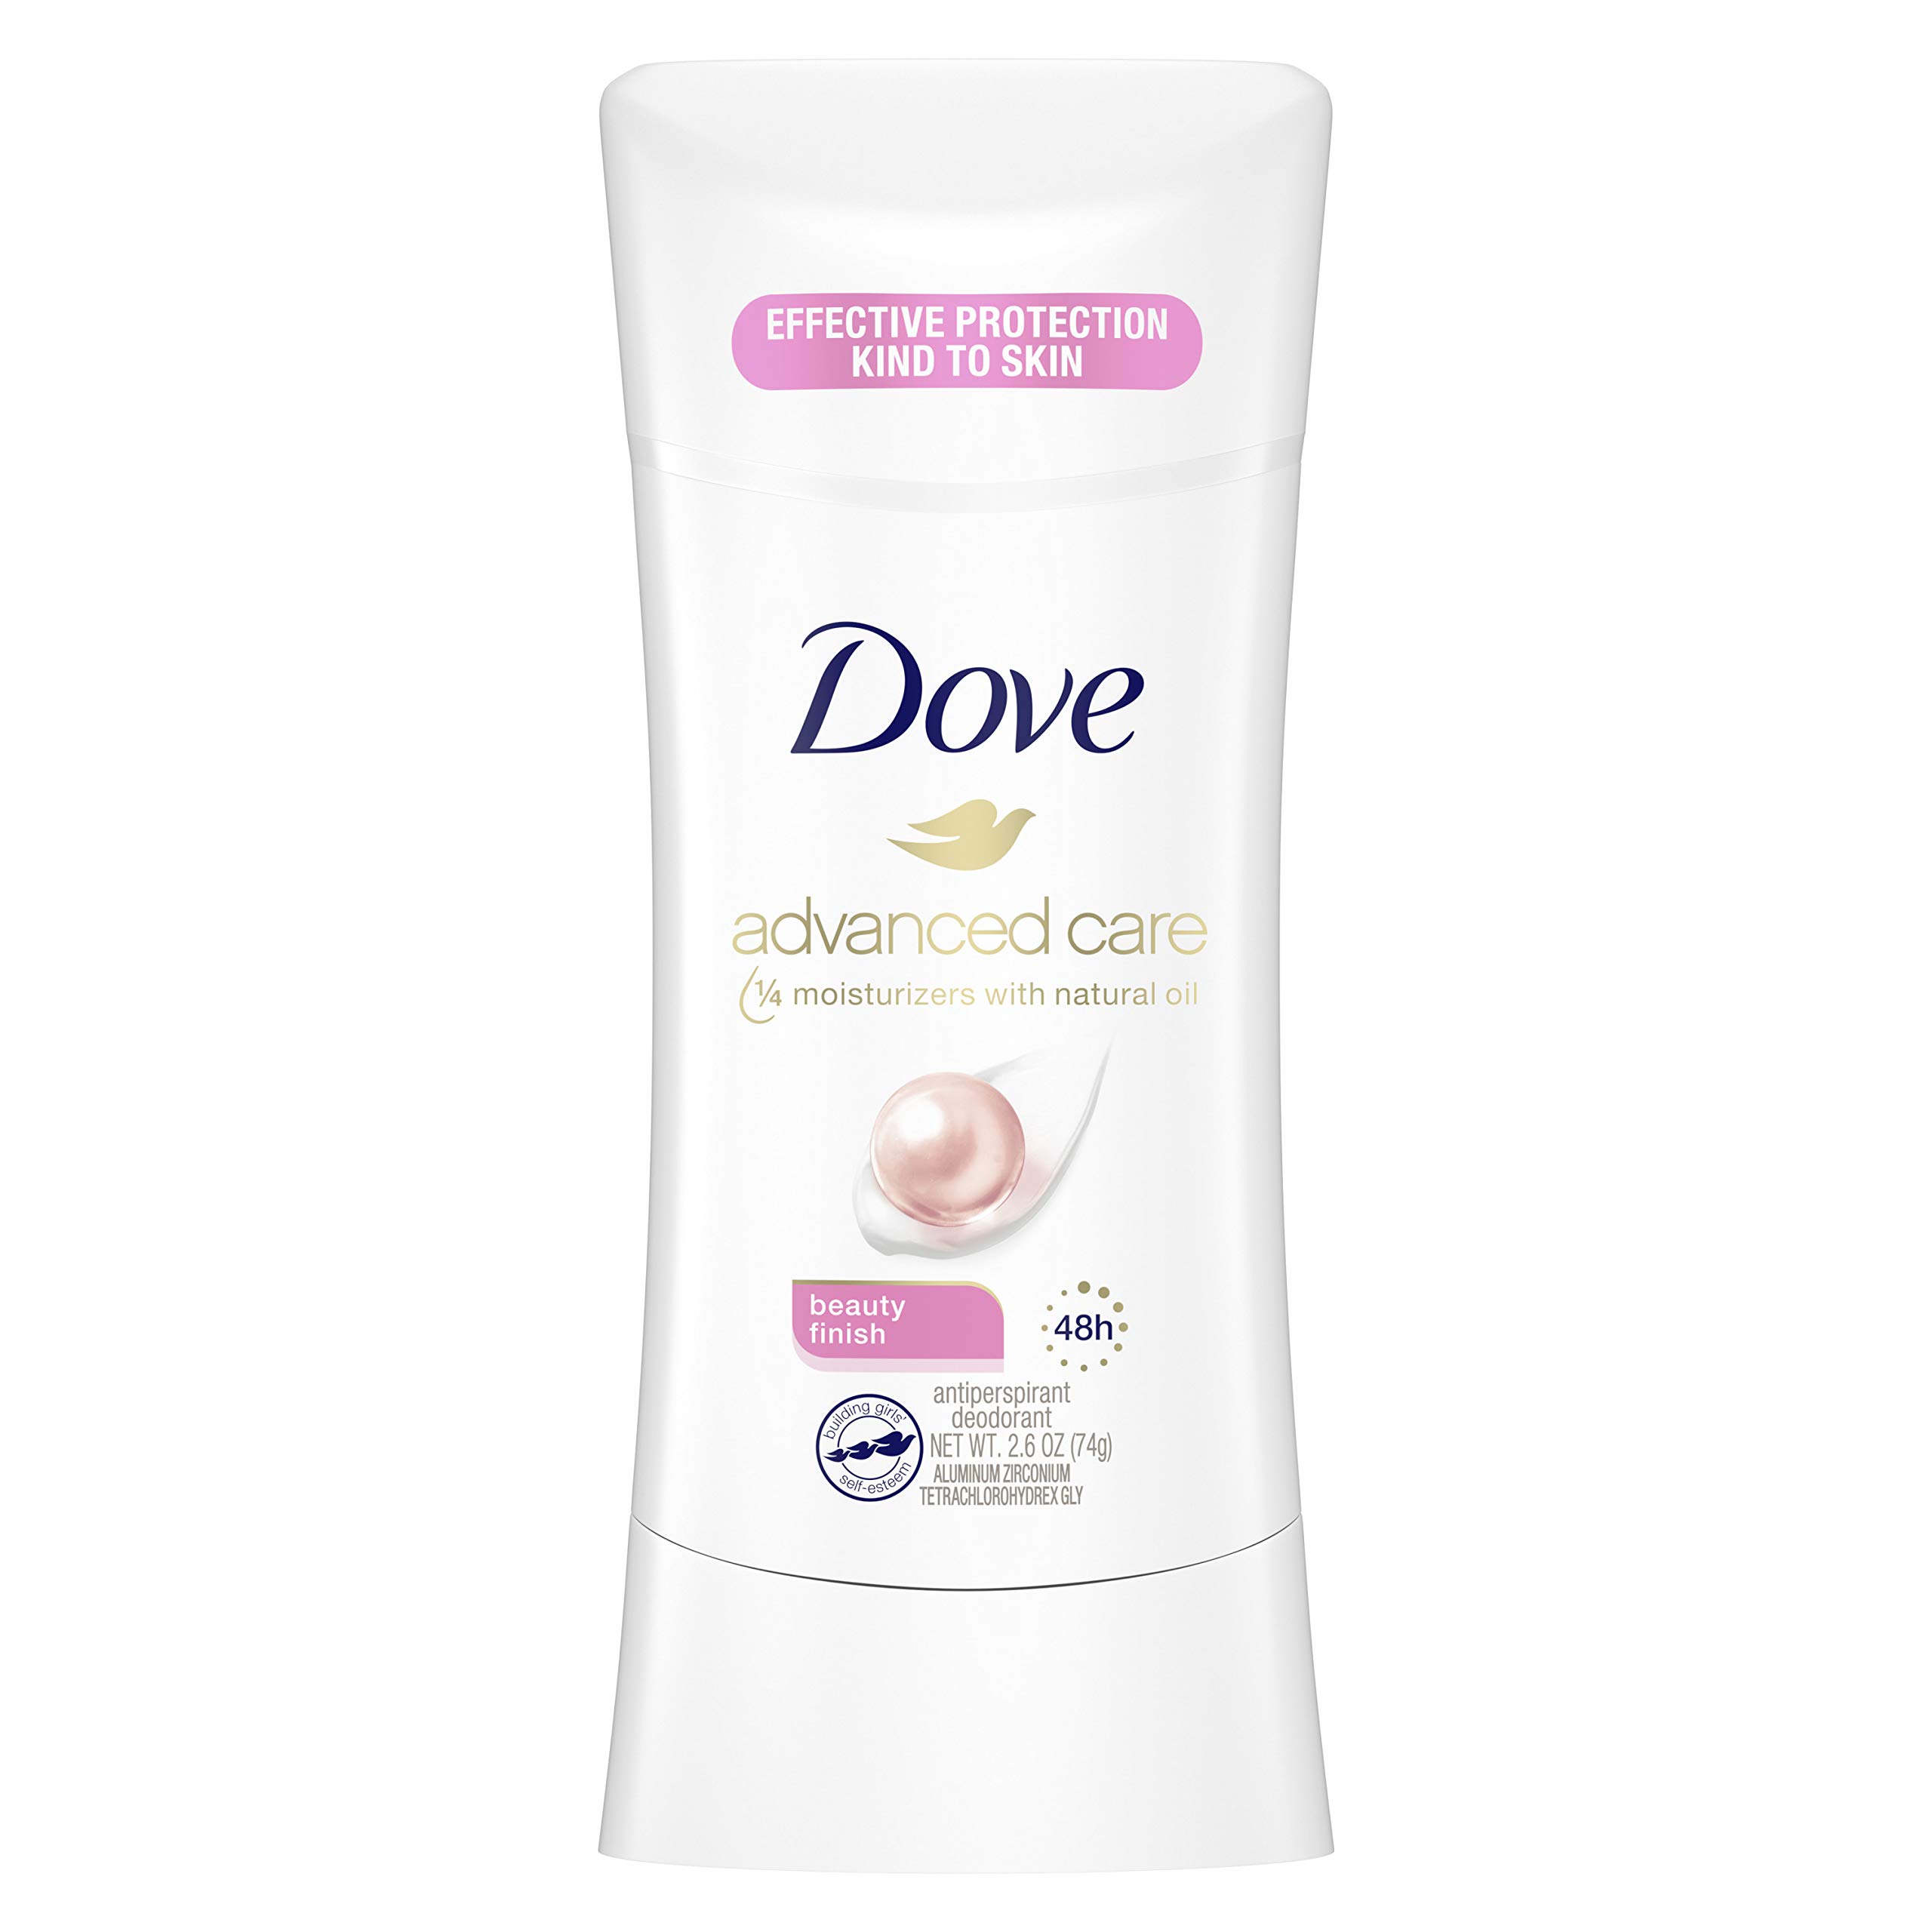 Walmart: FREE + $0.37 MONEYMAKER Dove Advanced Care Deodorant (JUST USE YOUR PHONE!)